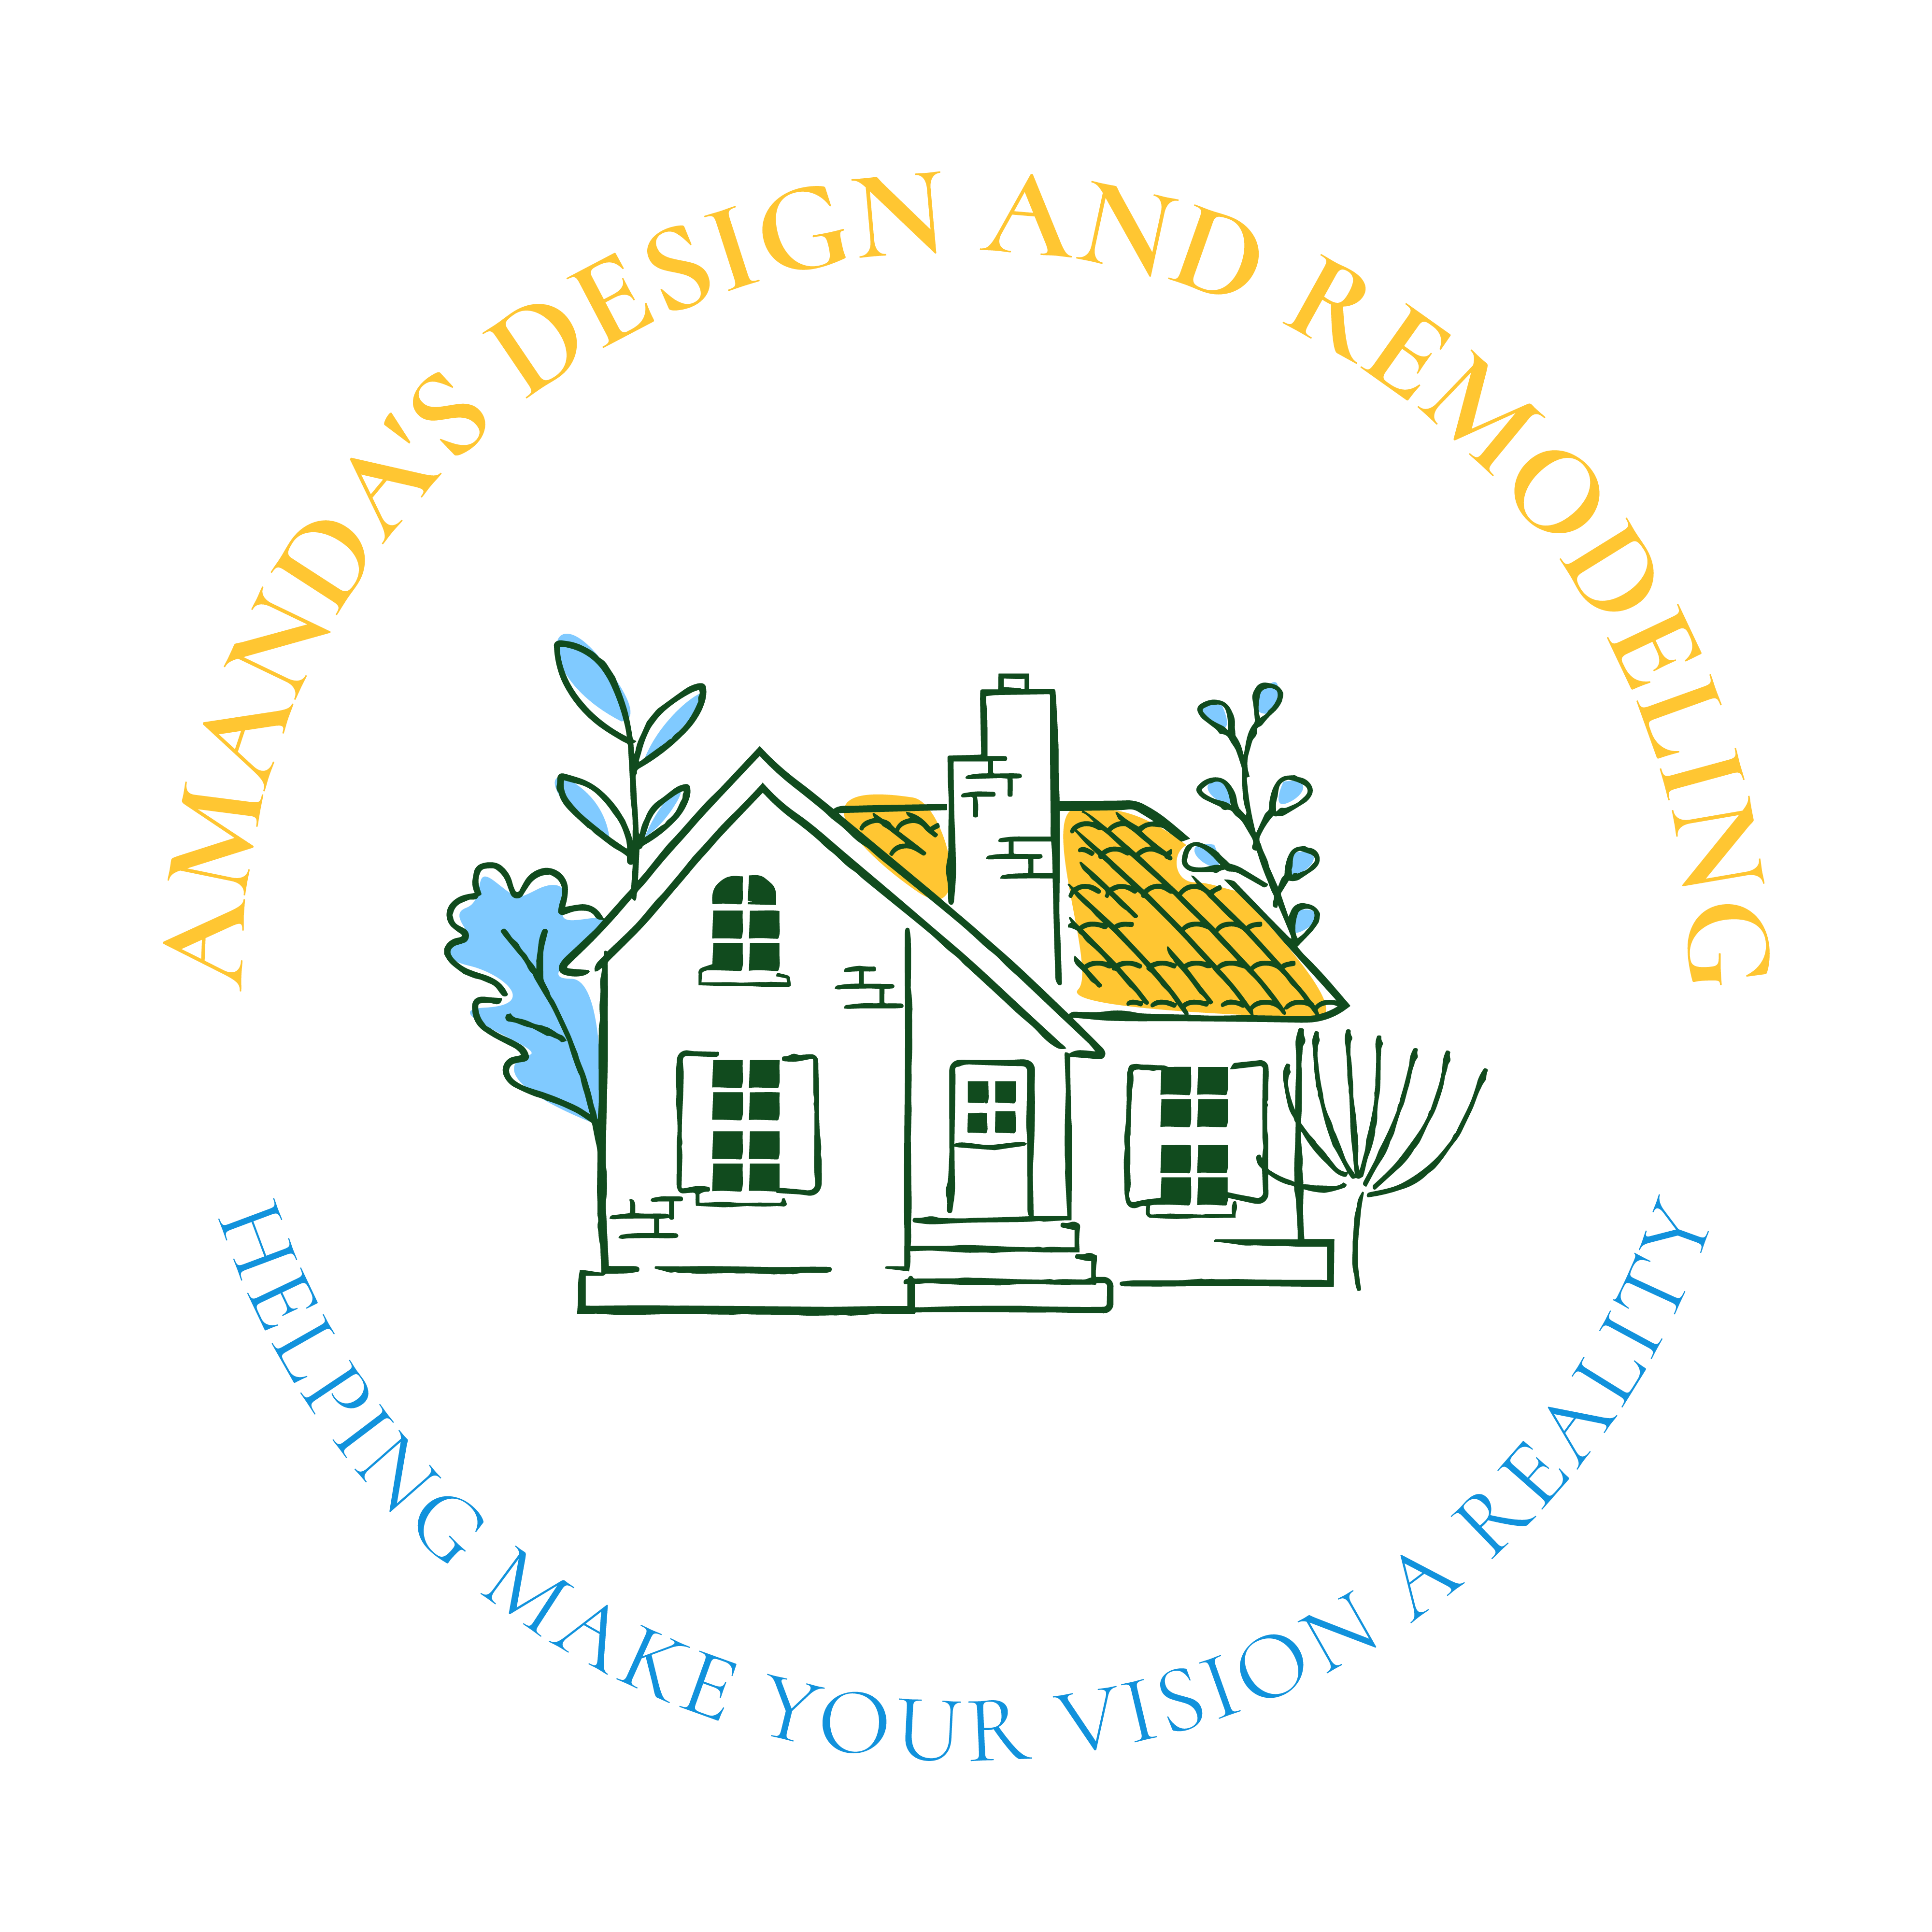 Amanda's Design and Remodeling LLC Logo